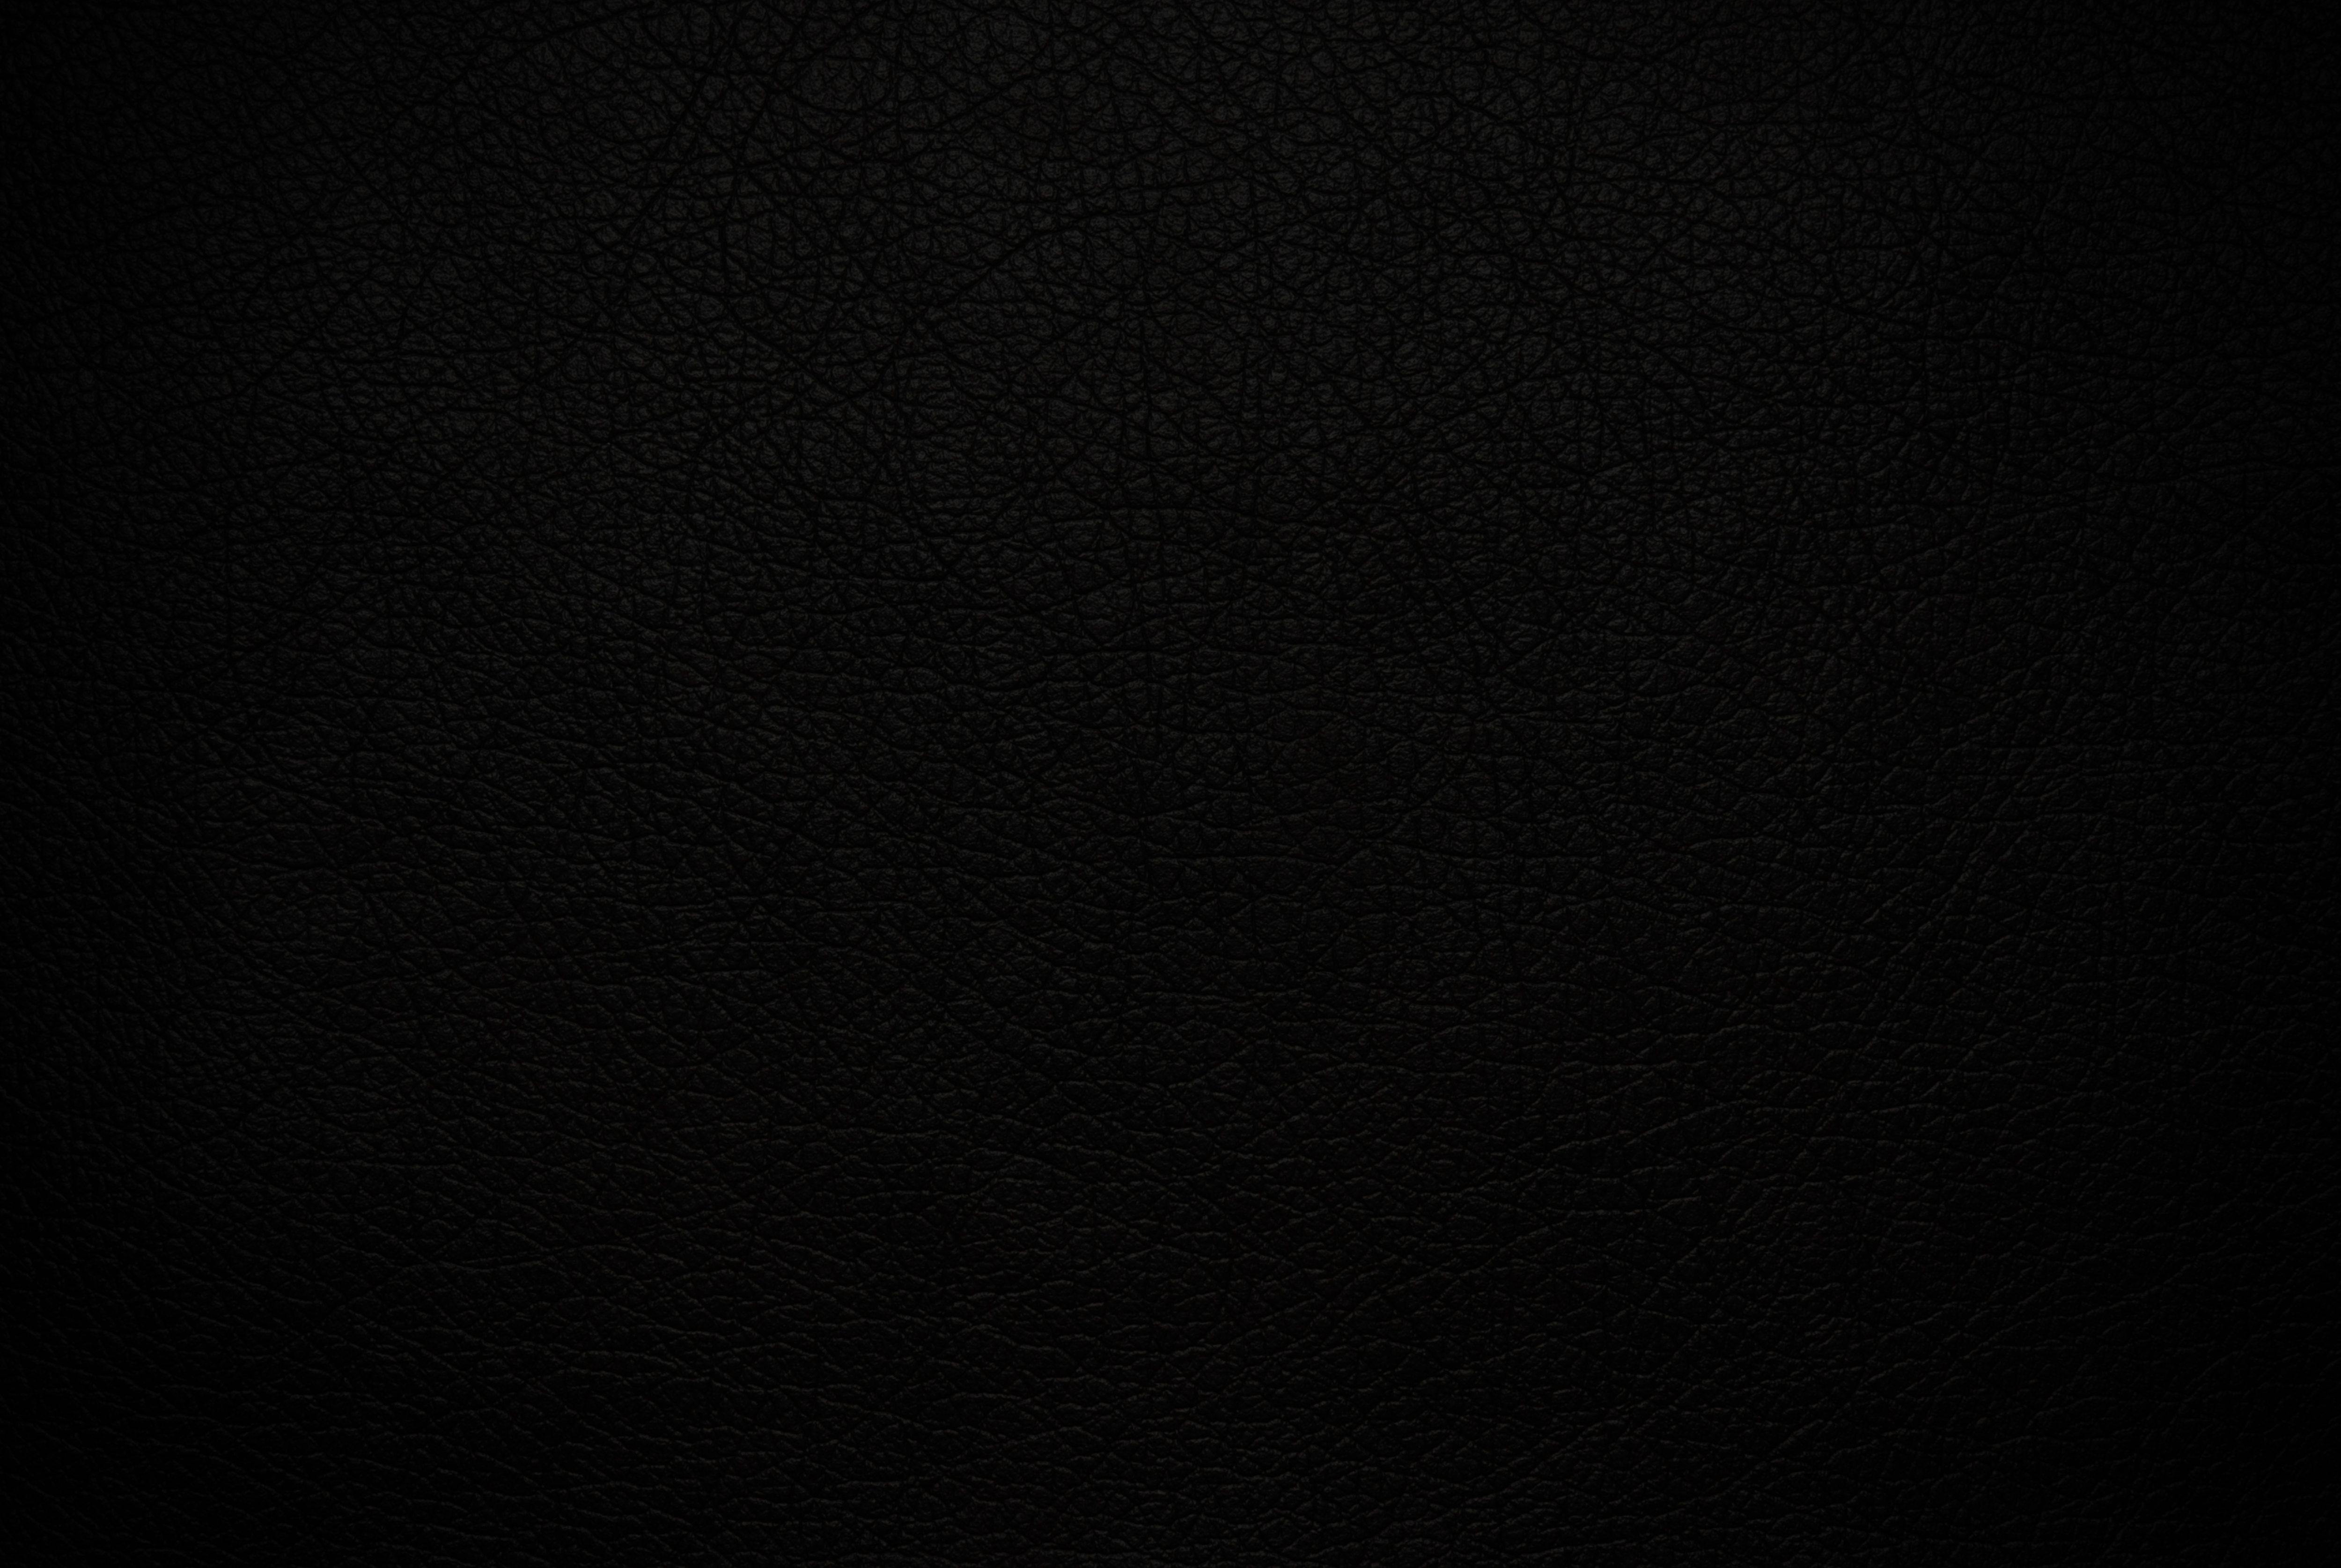 Leather Black Cracked Background Texture Azden Pro Shop